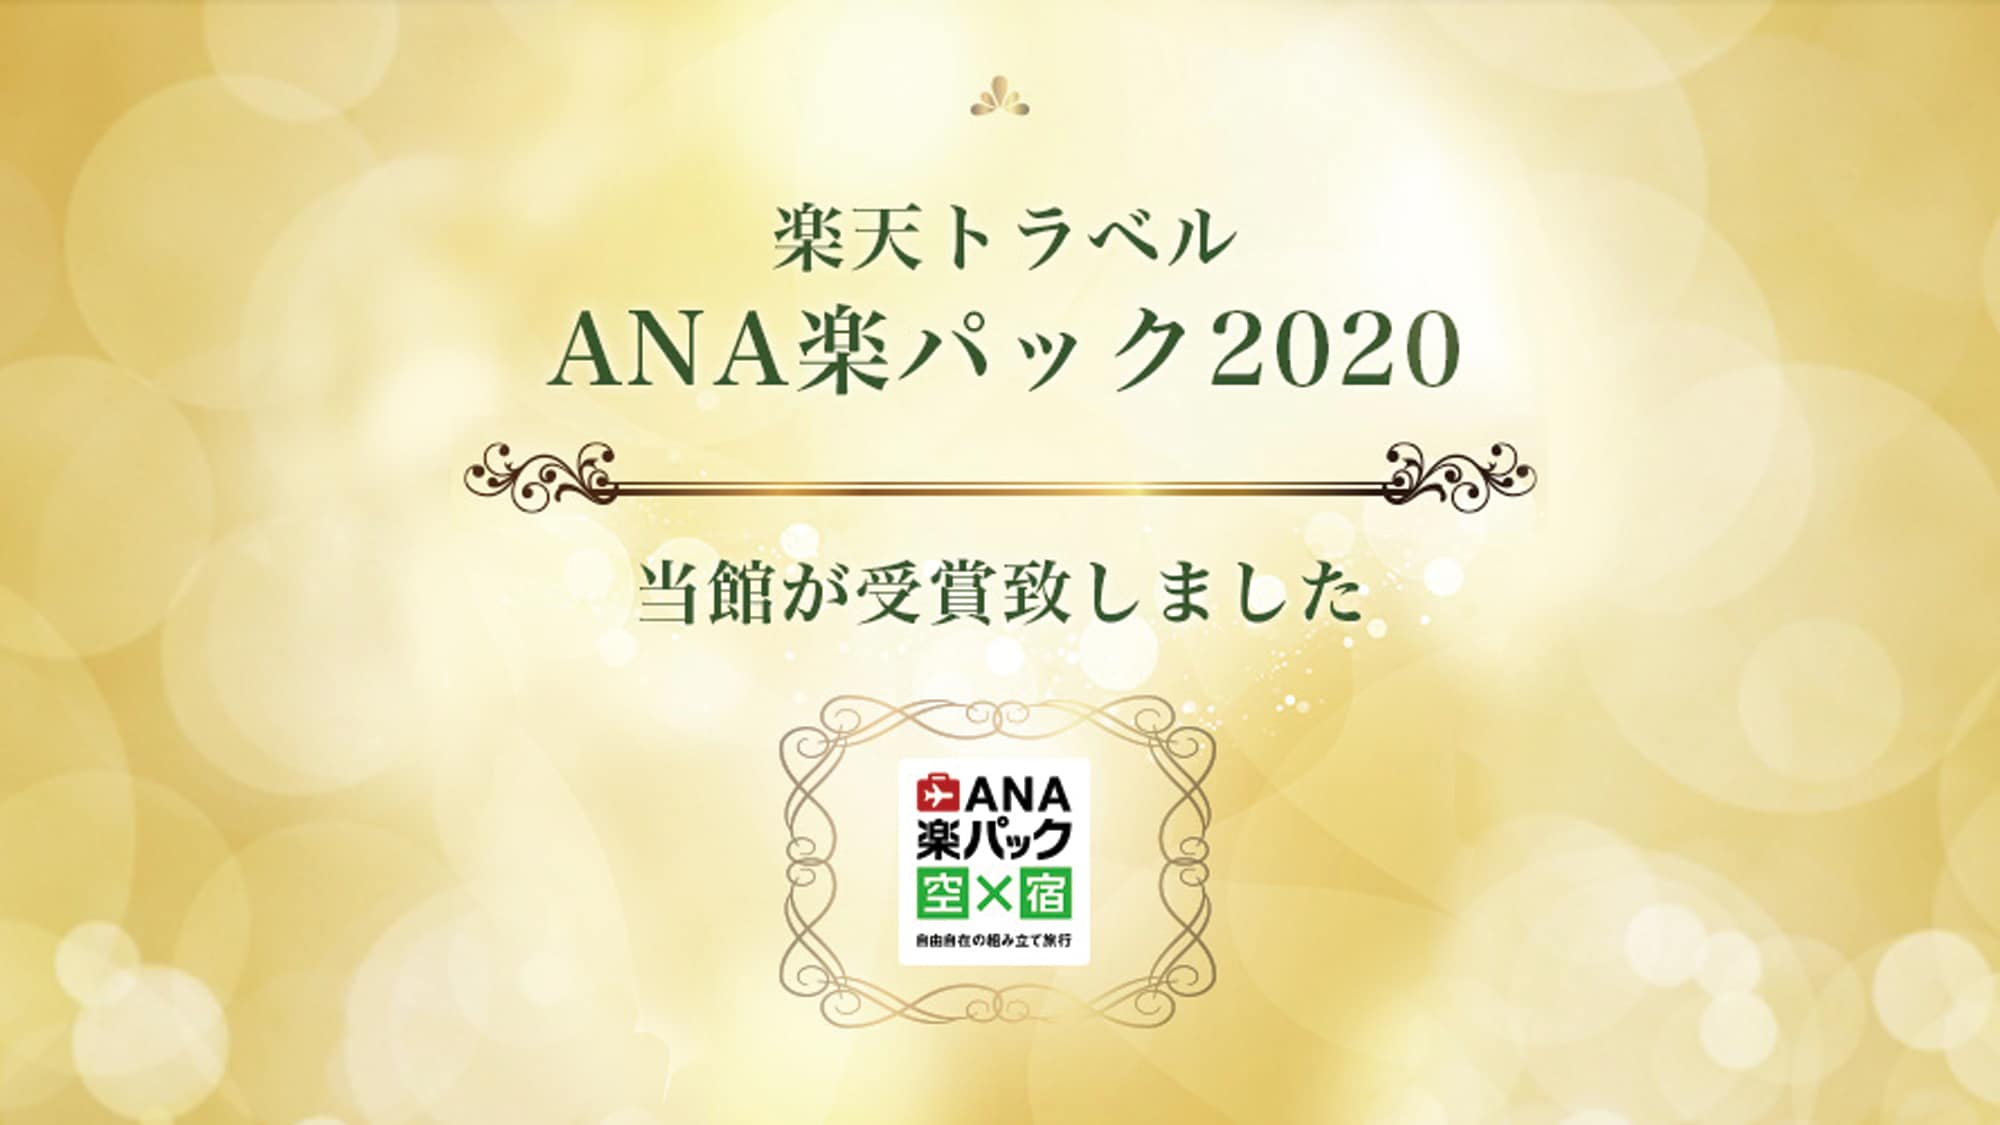 Received ANA Raku Pack 2020!